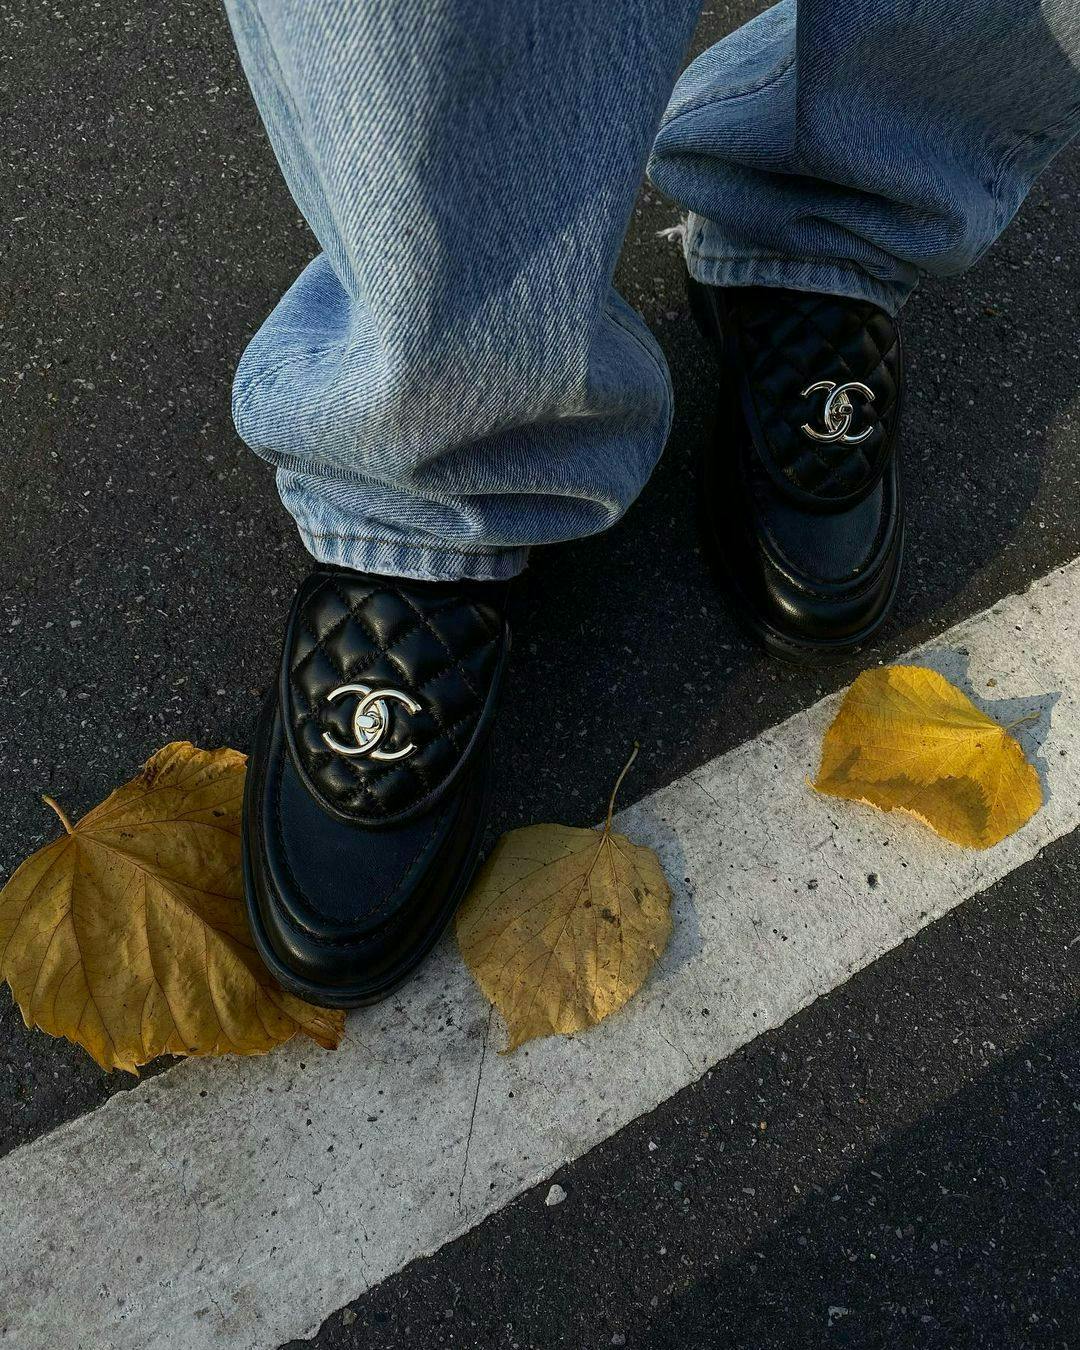 clothing apparel tarmac asphalt shoe footwear person human